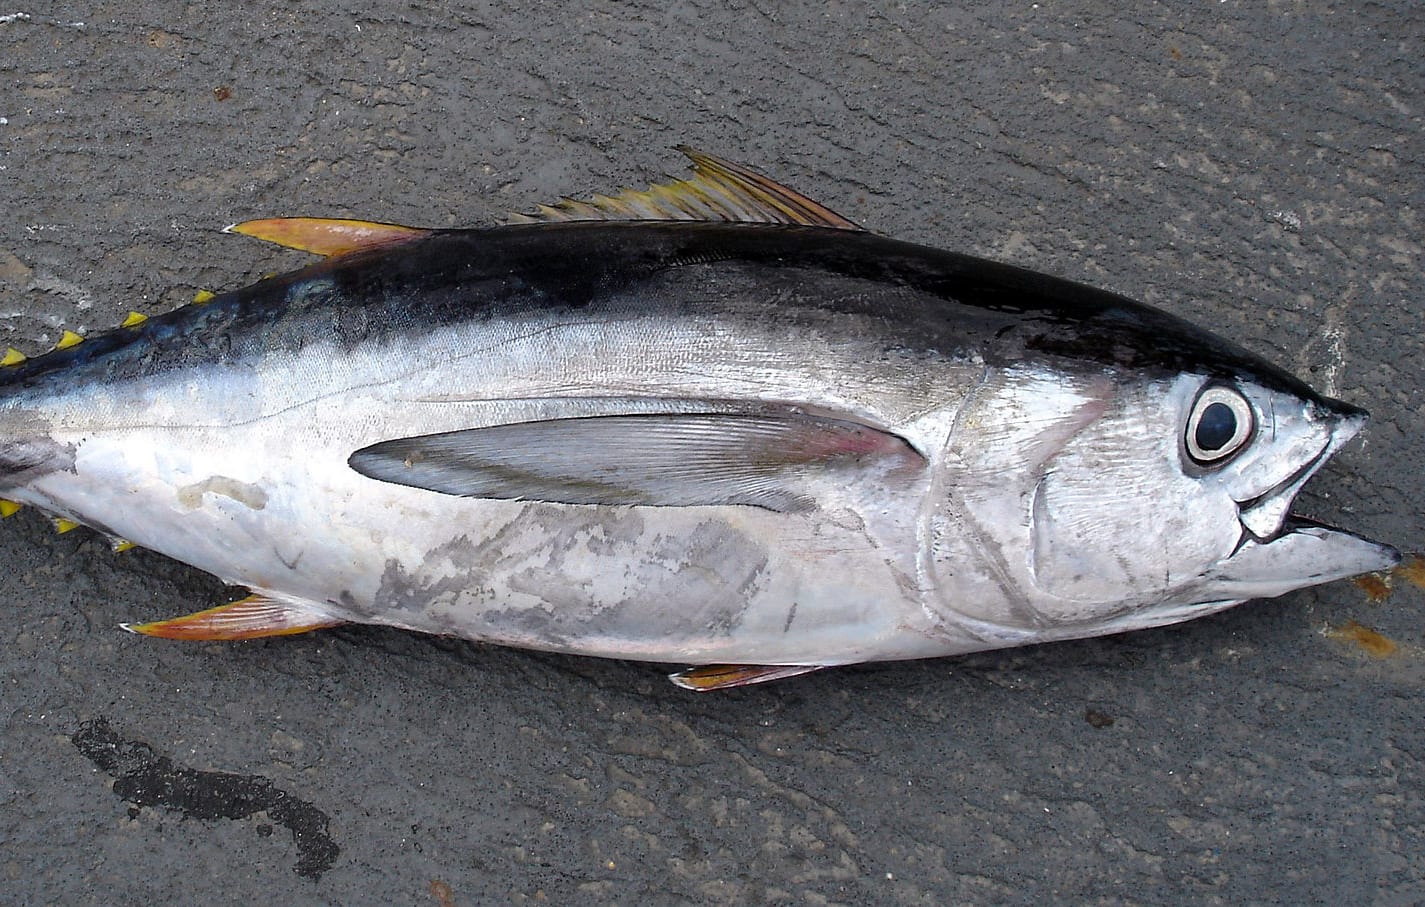 a Big eye tuna